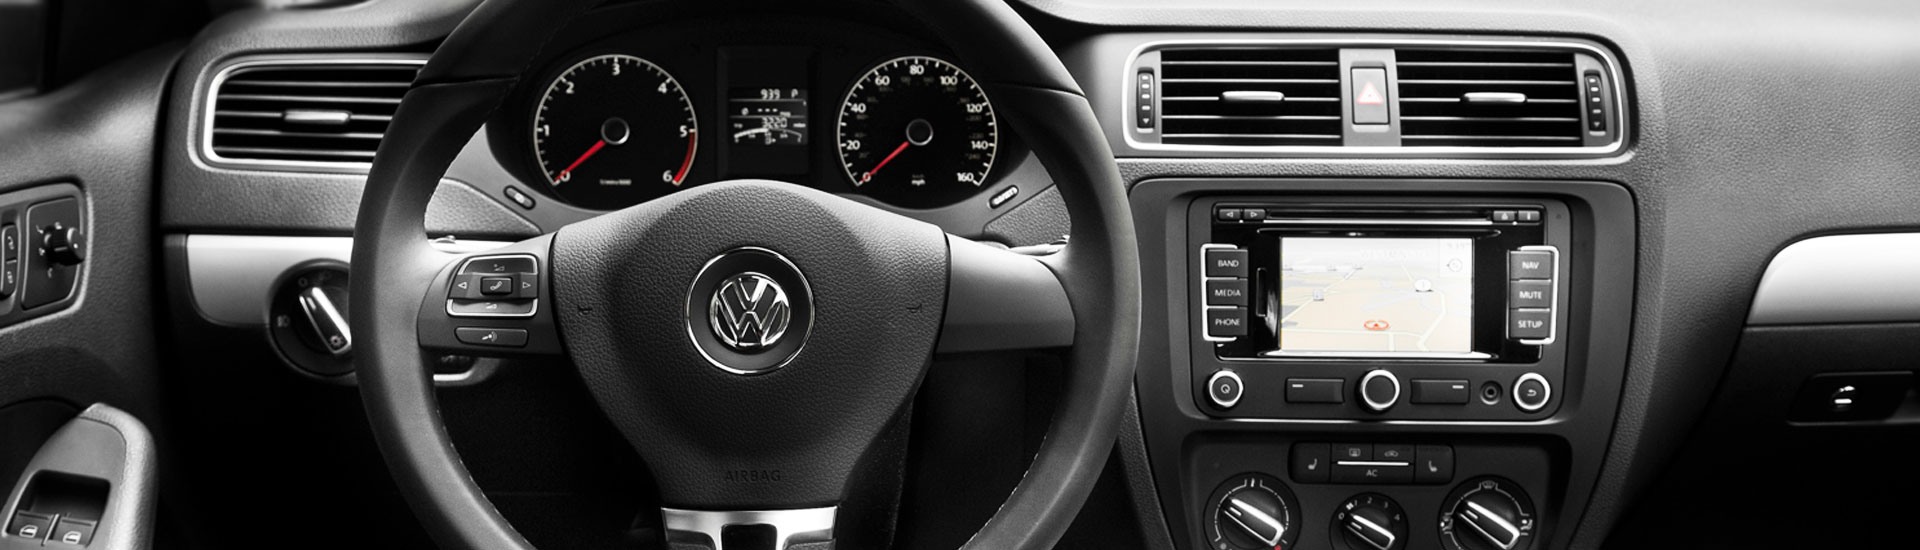 Volkswagen Jetta Custom Dash Kits